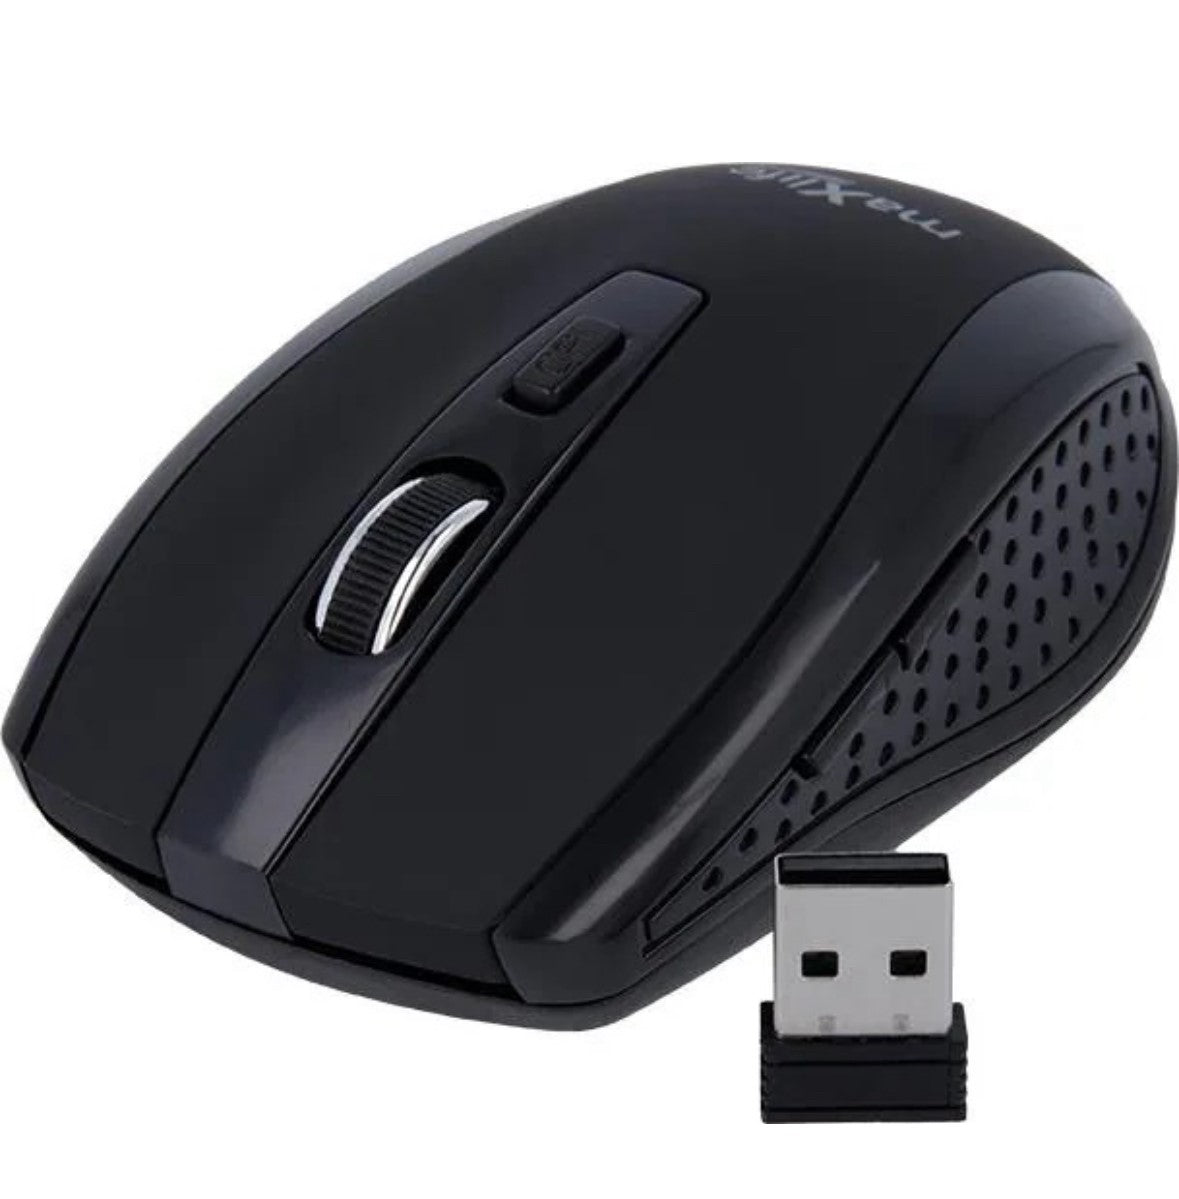 maXlife Optical Wireless Mouse - Black